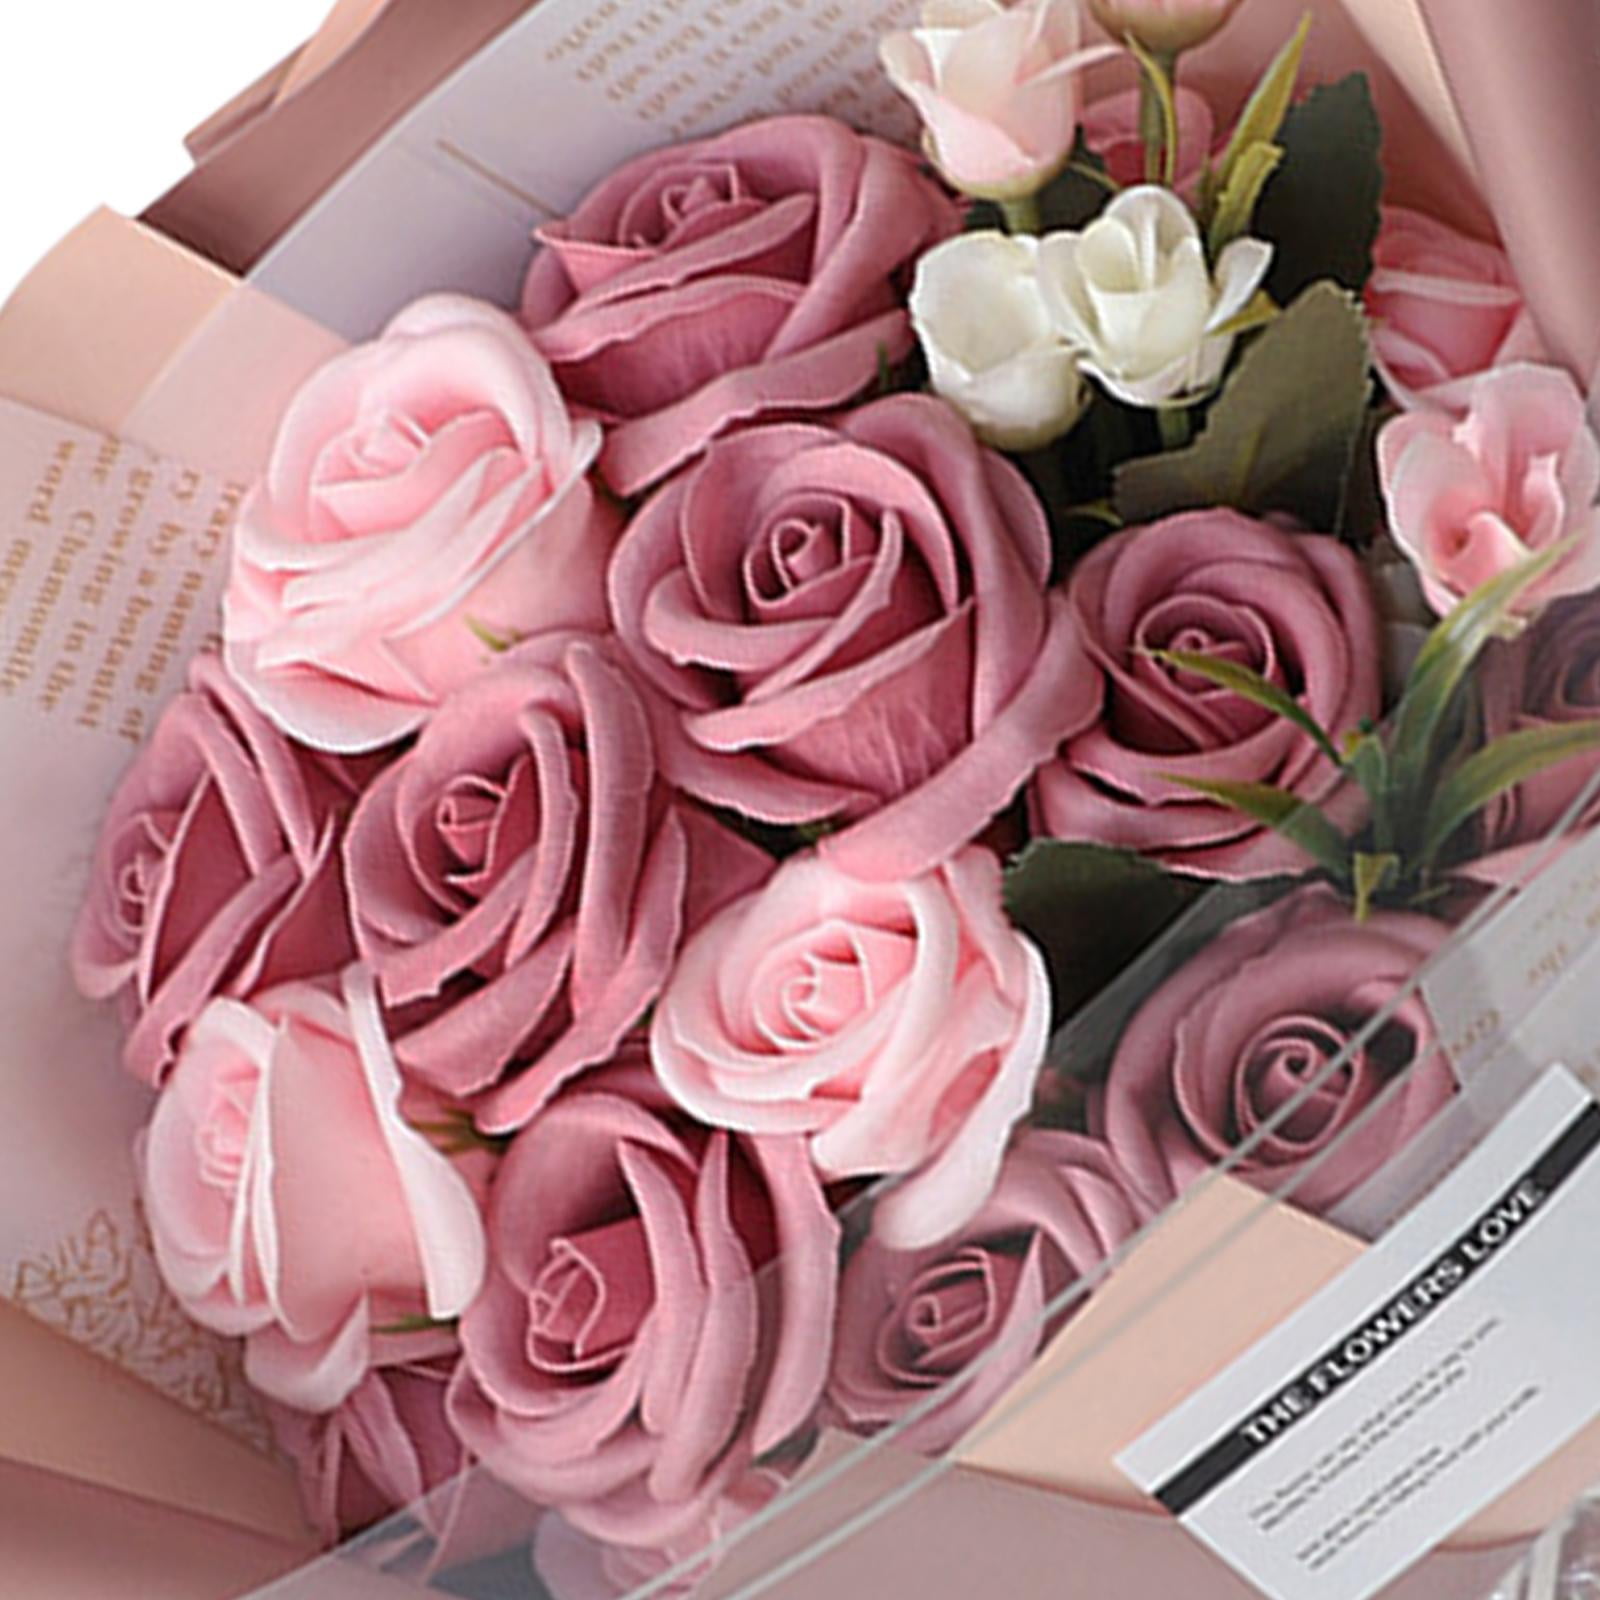 Bouquet Soap Flower Box Centerpieces Arrangements Gift for Home Decorations  Girlfriend Birthday Baby Shower , light pink